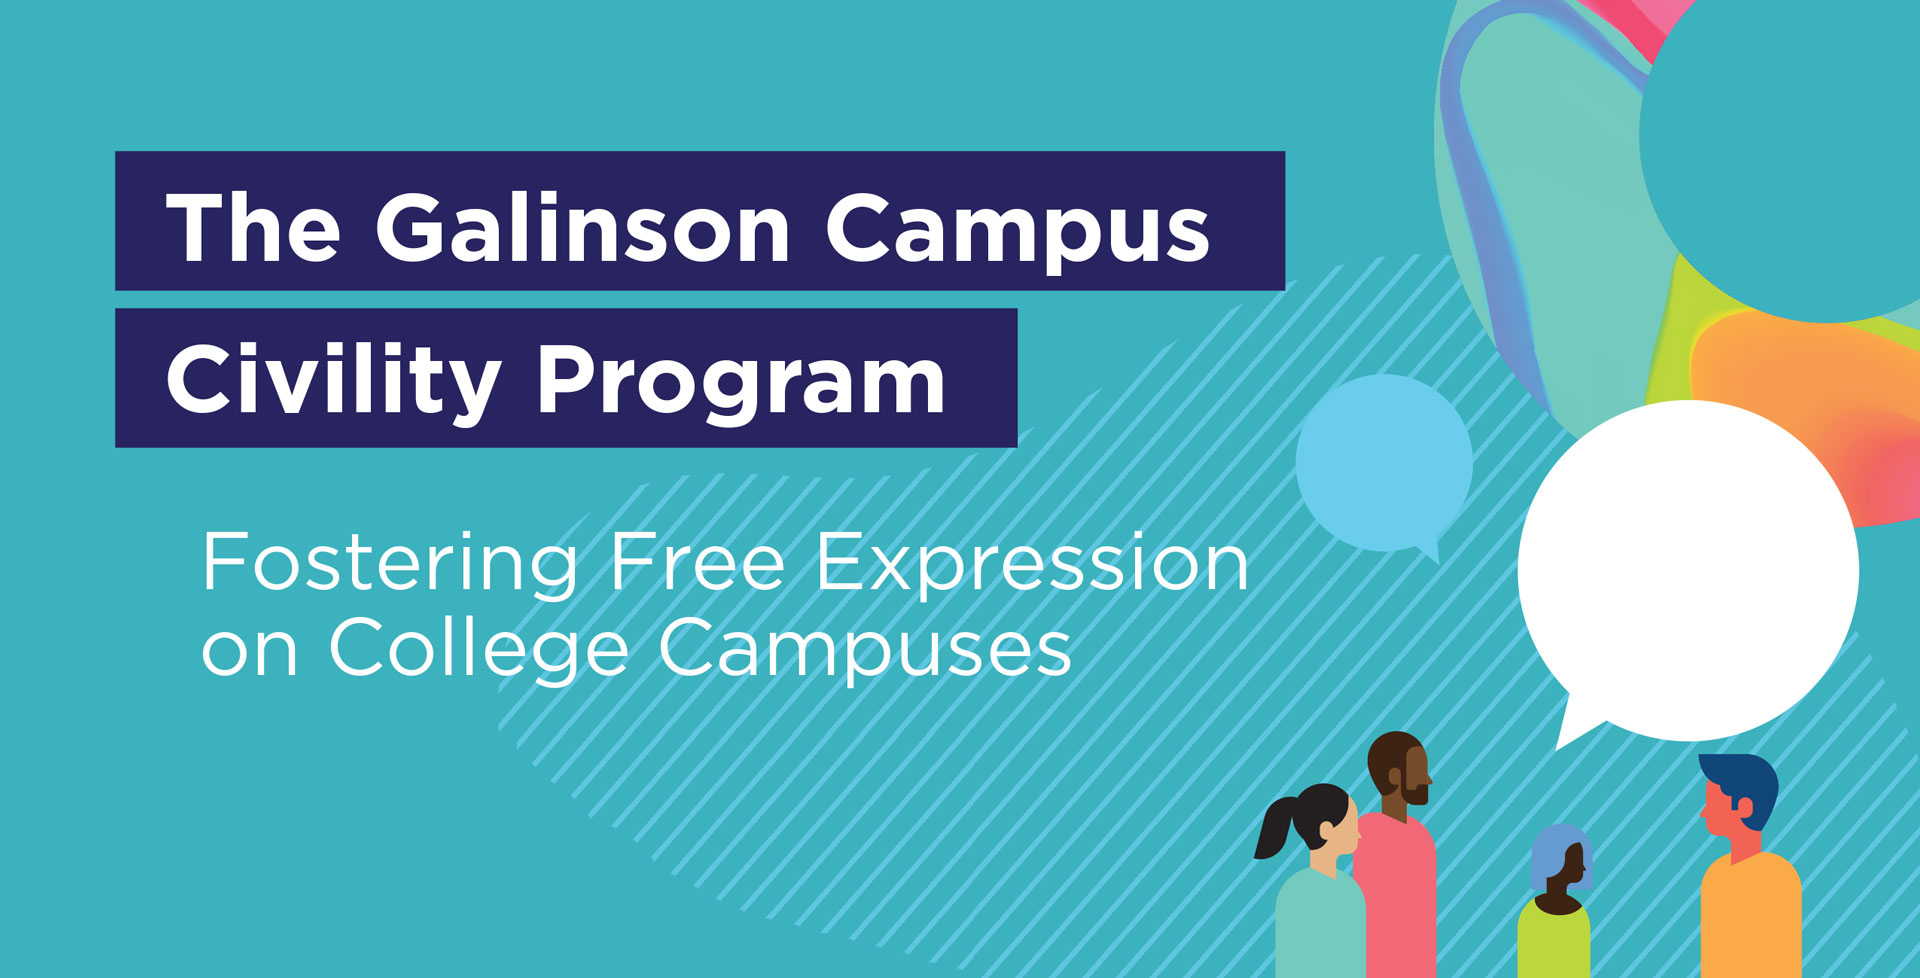 The Galinson Campus Civility Program